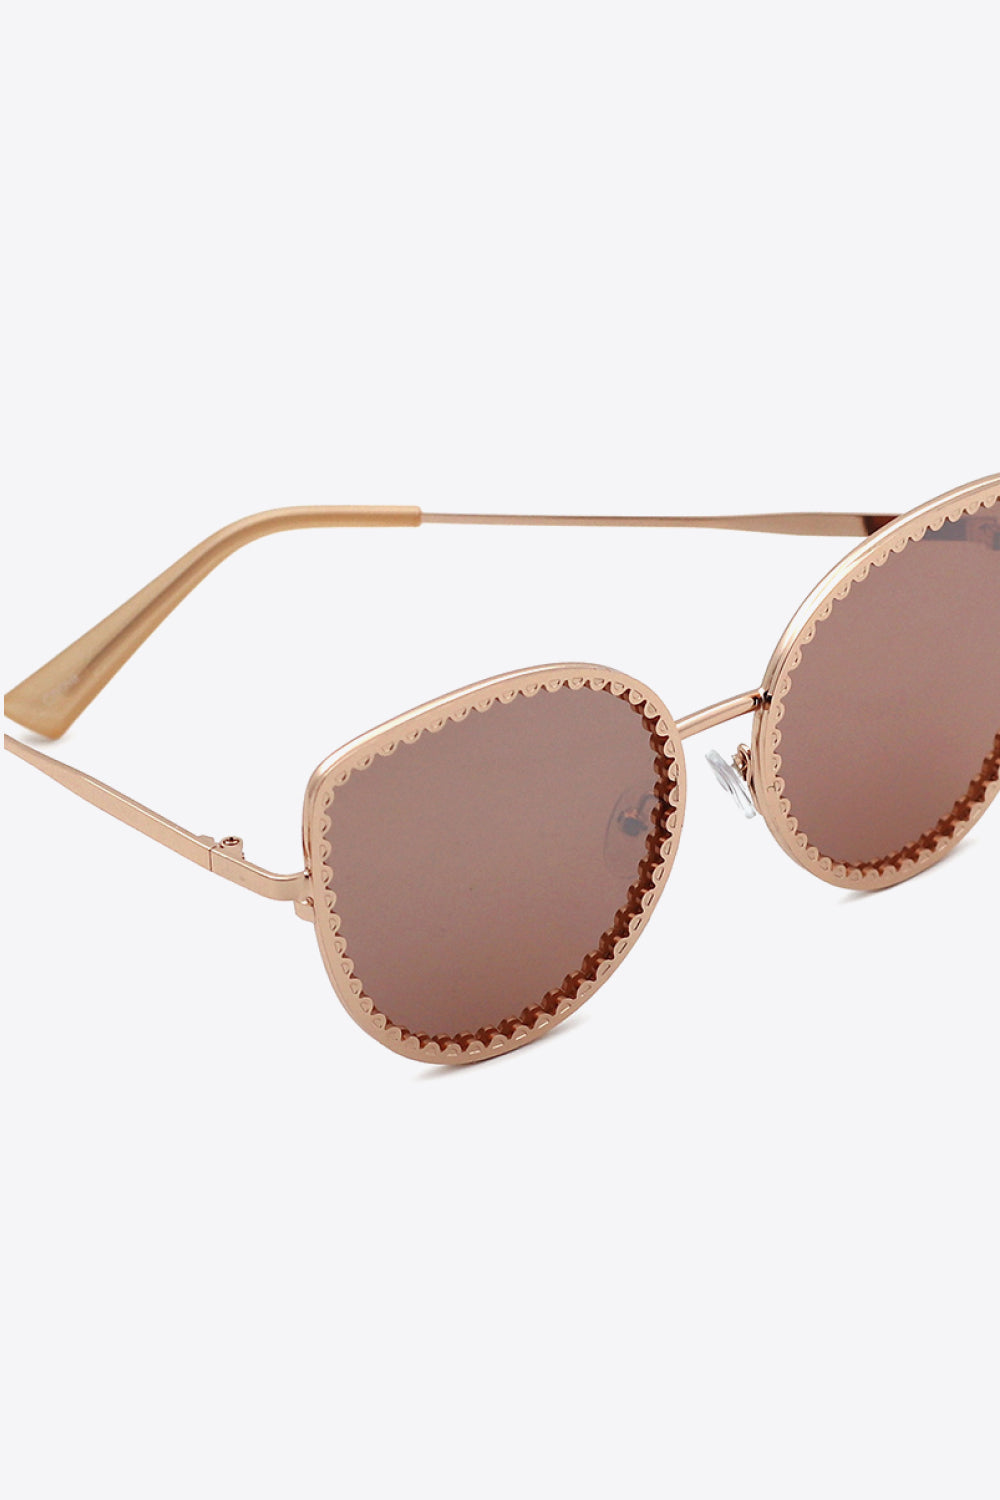 Full Rim Metal Frame Sunglasses One Size Sunglasses by Vim&Vigor | Vim&Vigor Boutique